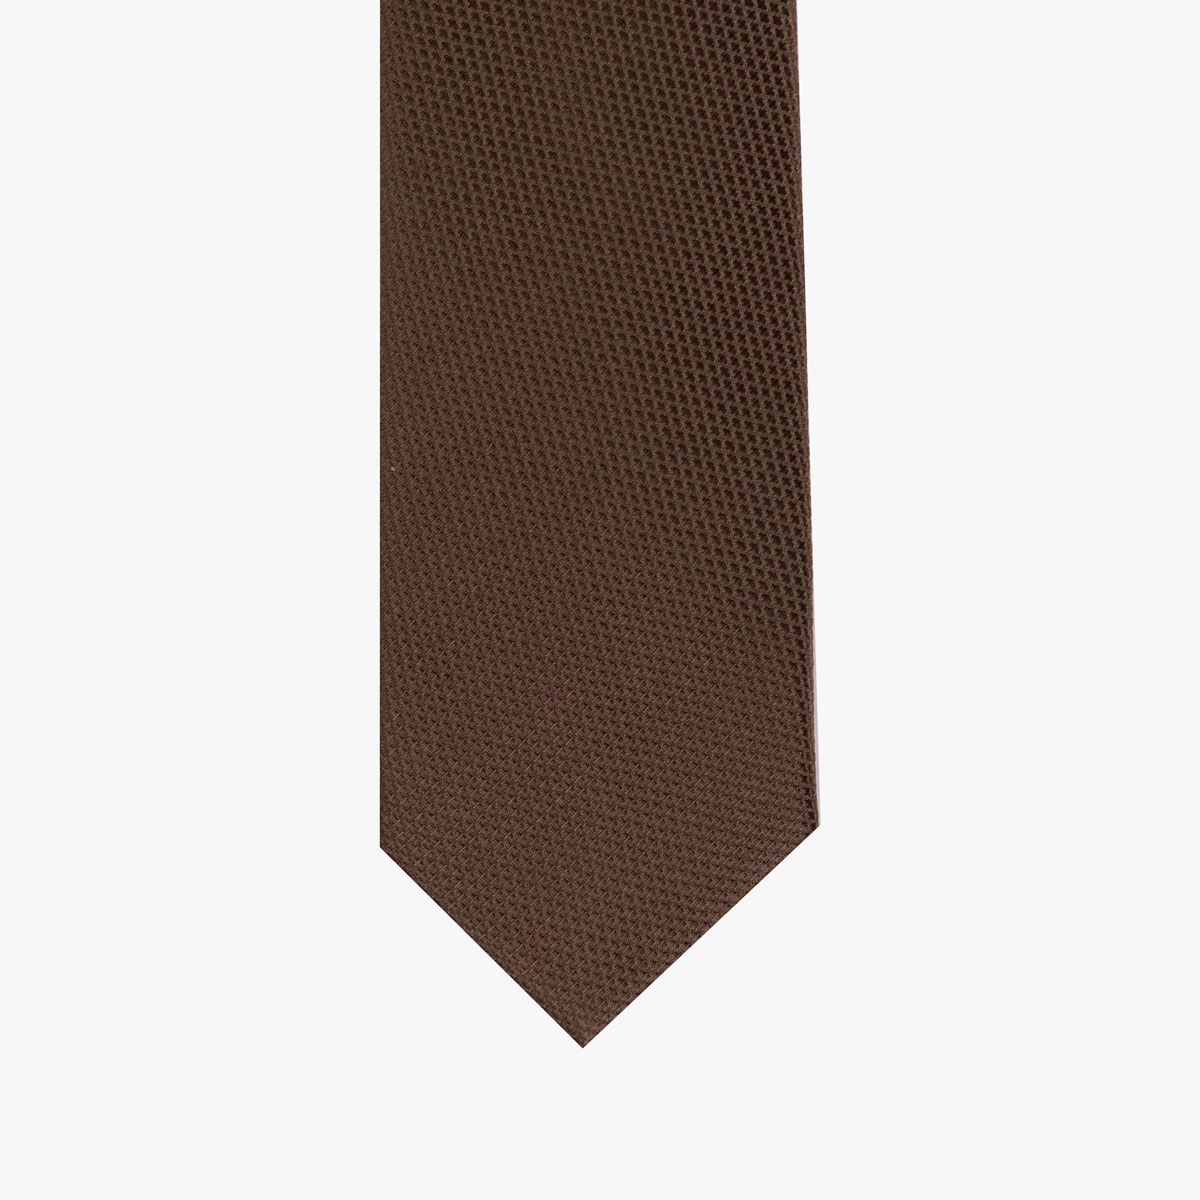 Krawatte in braun - Slim